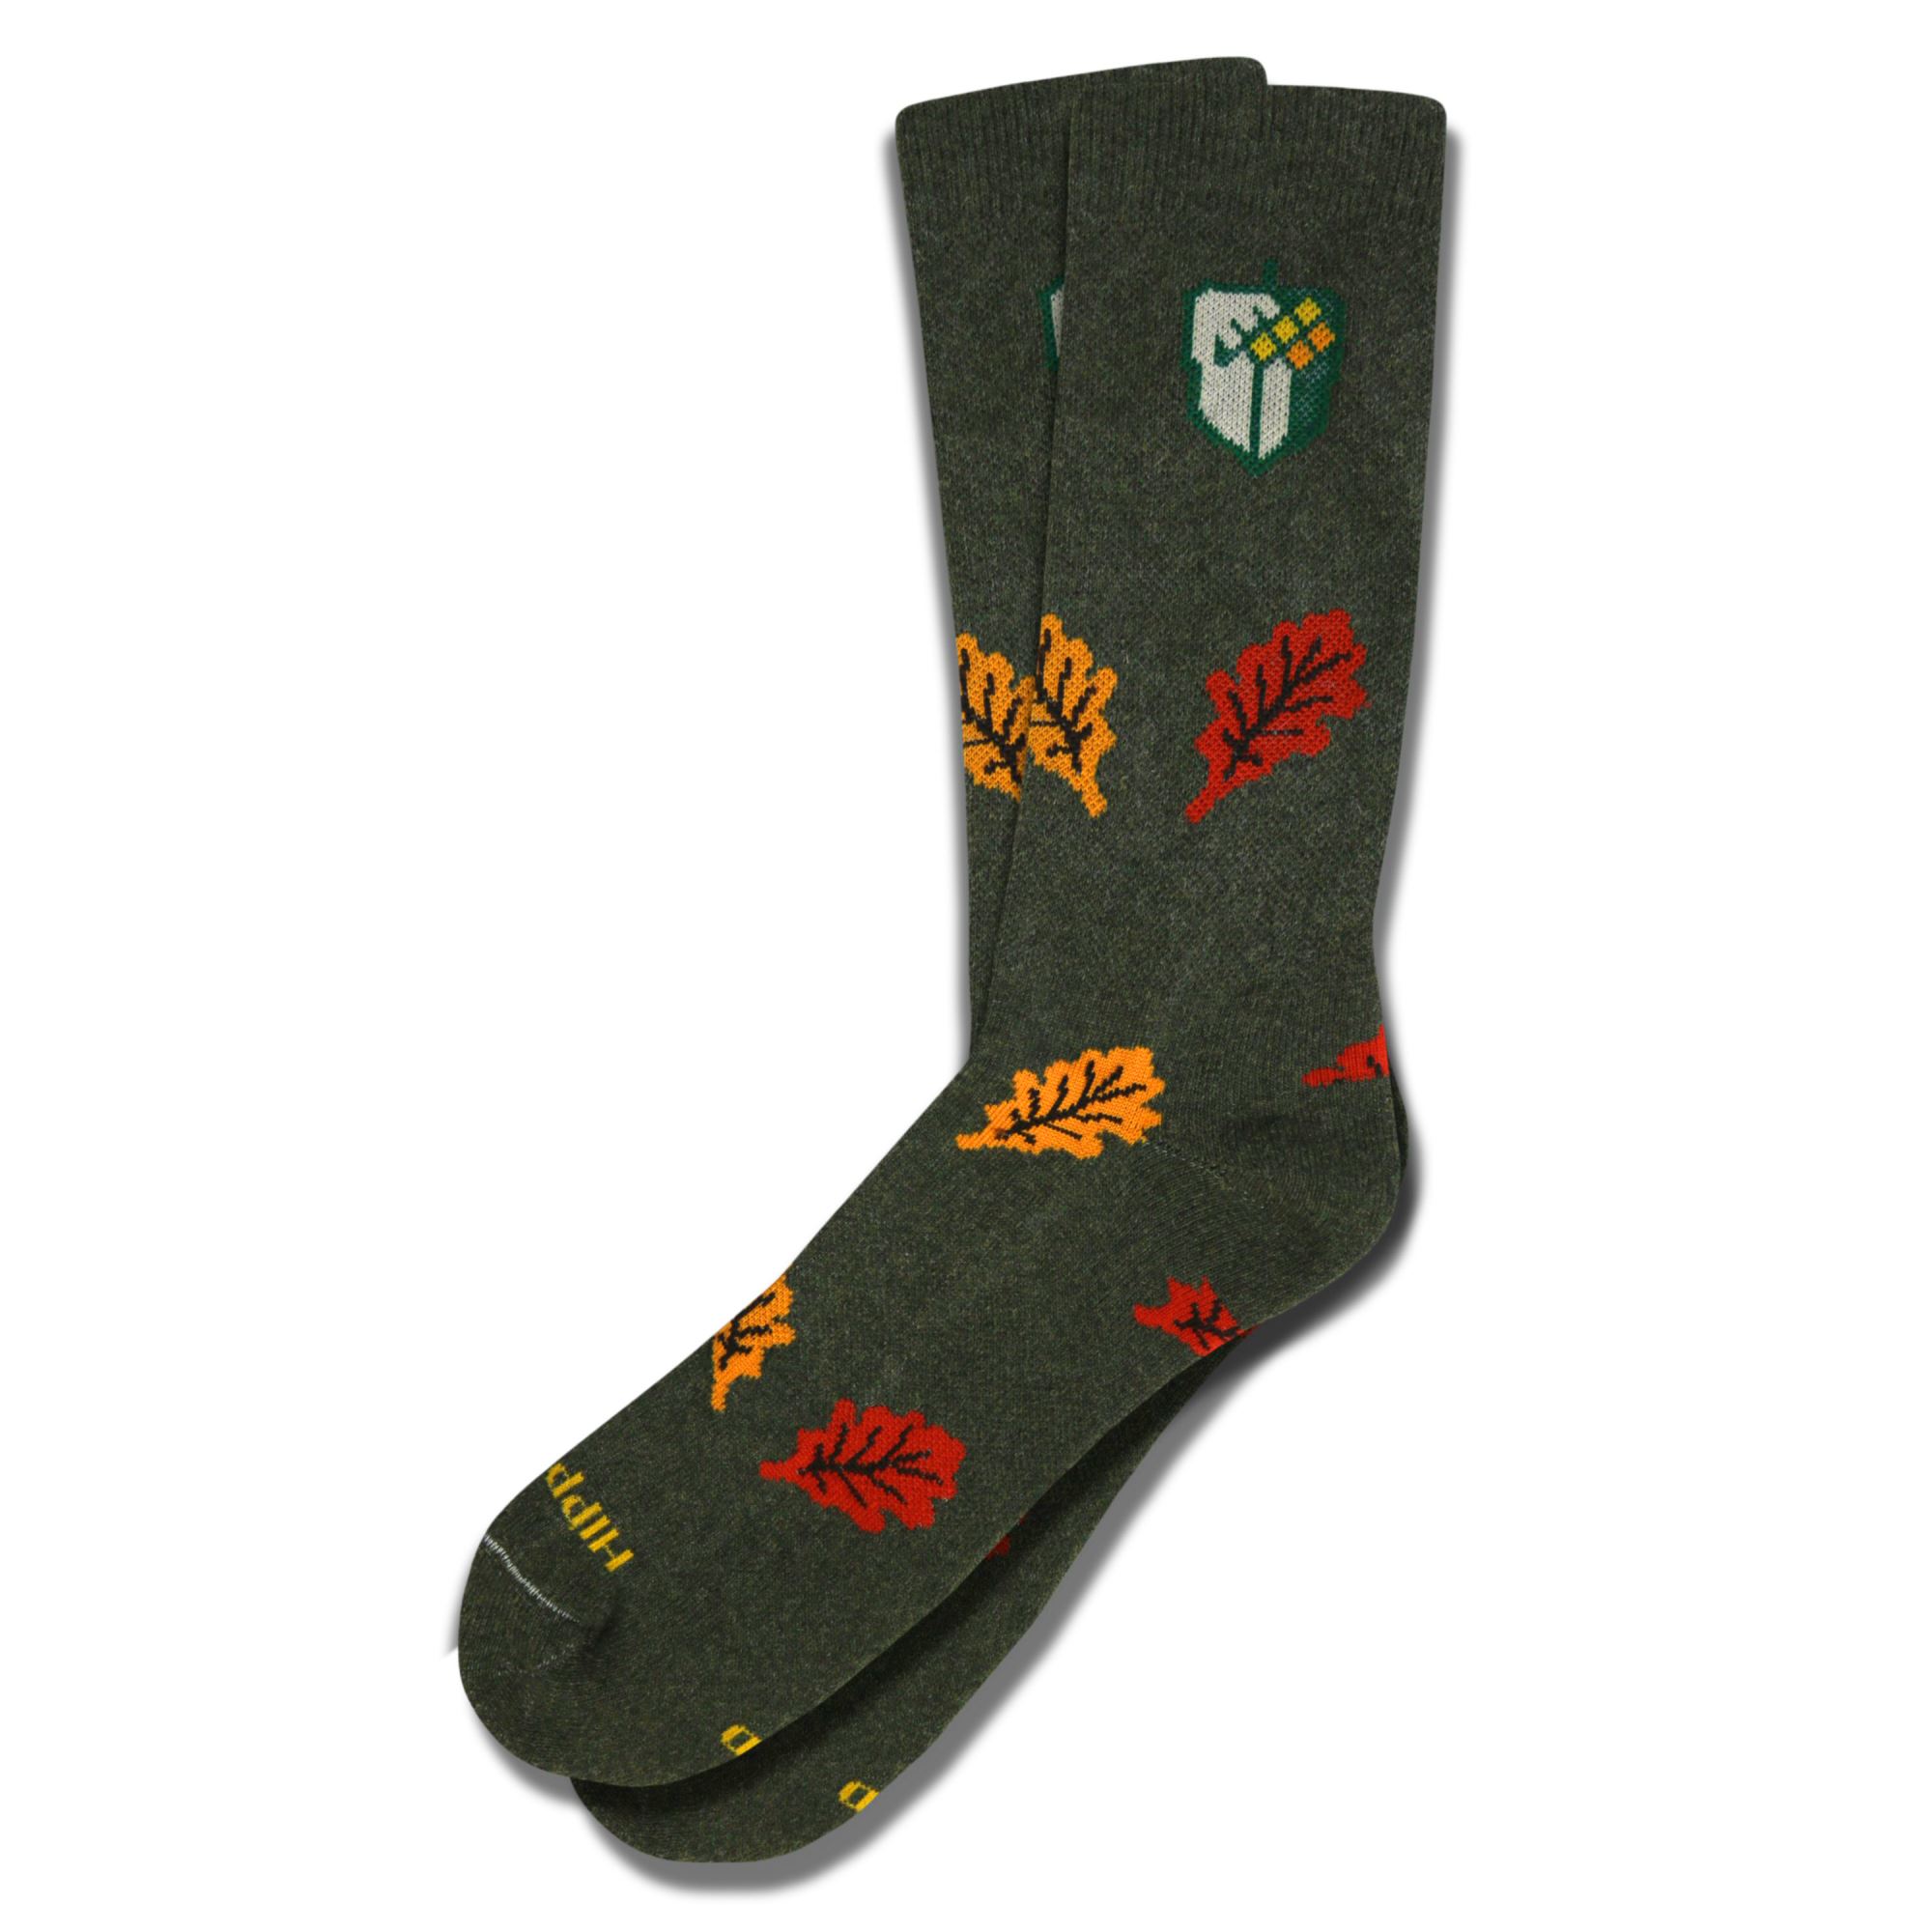 Wool socks with oak leaves